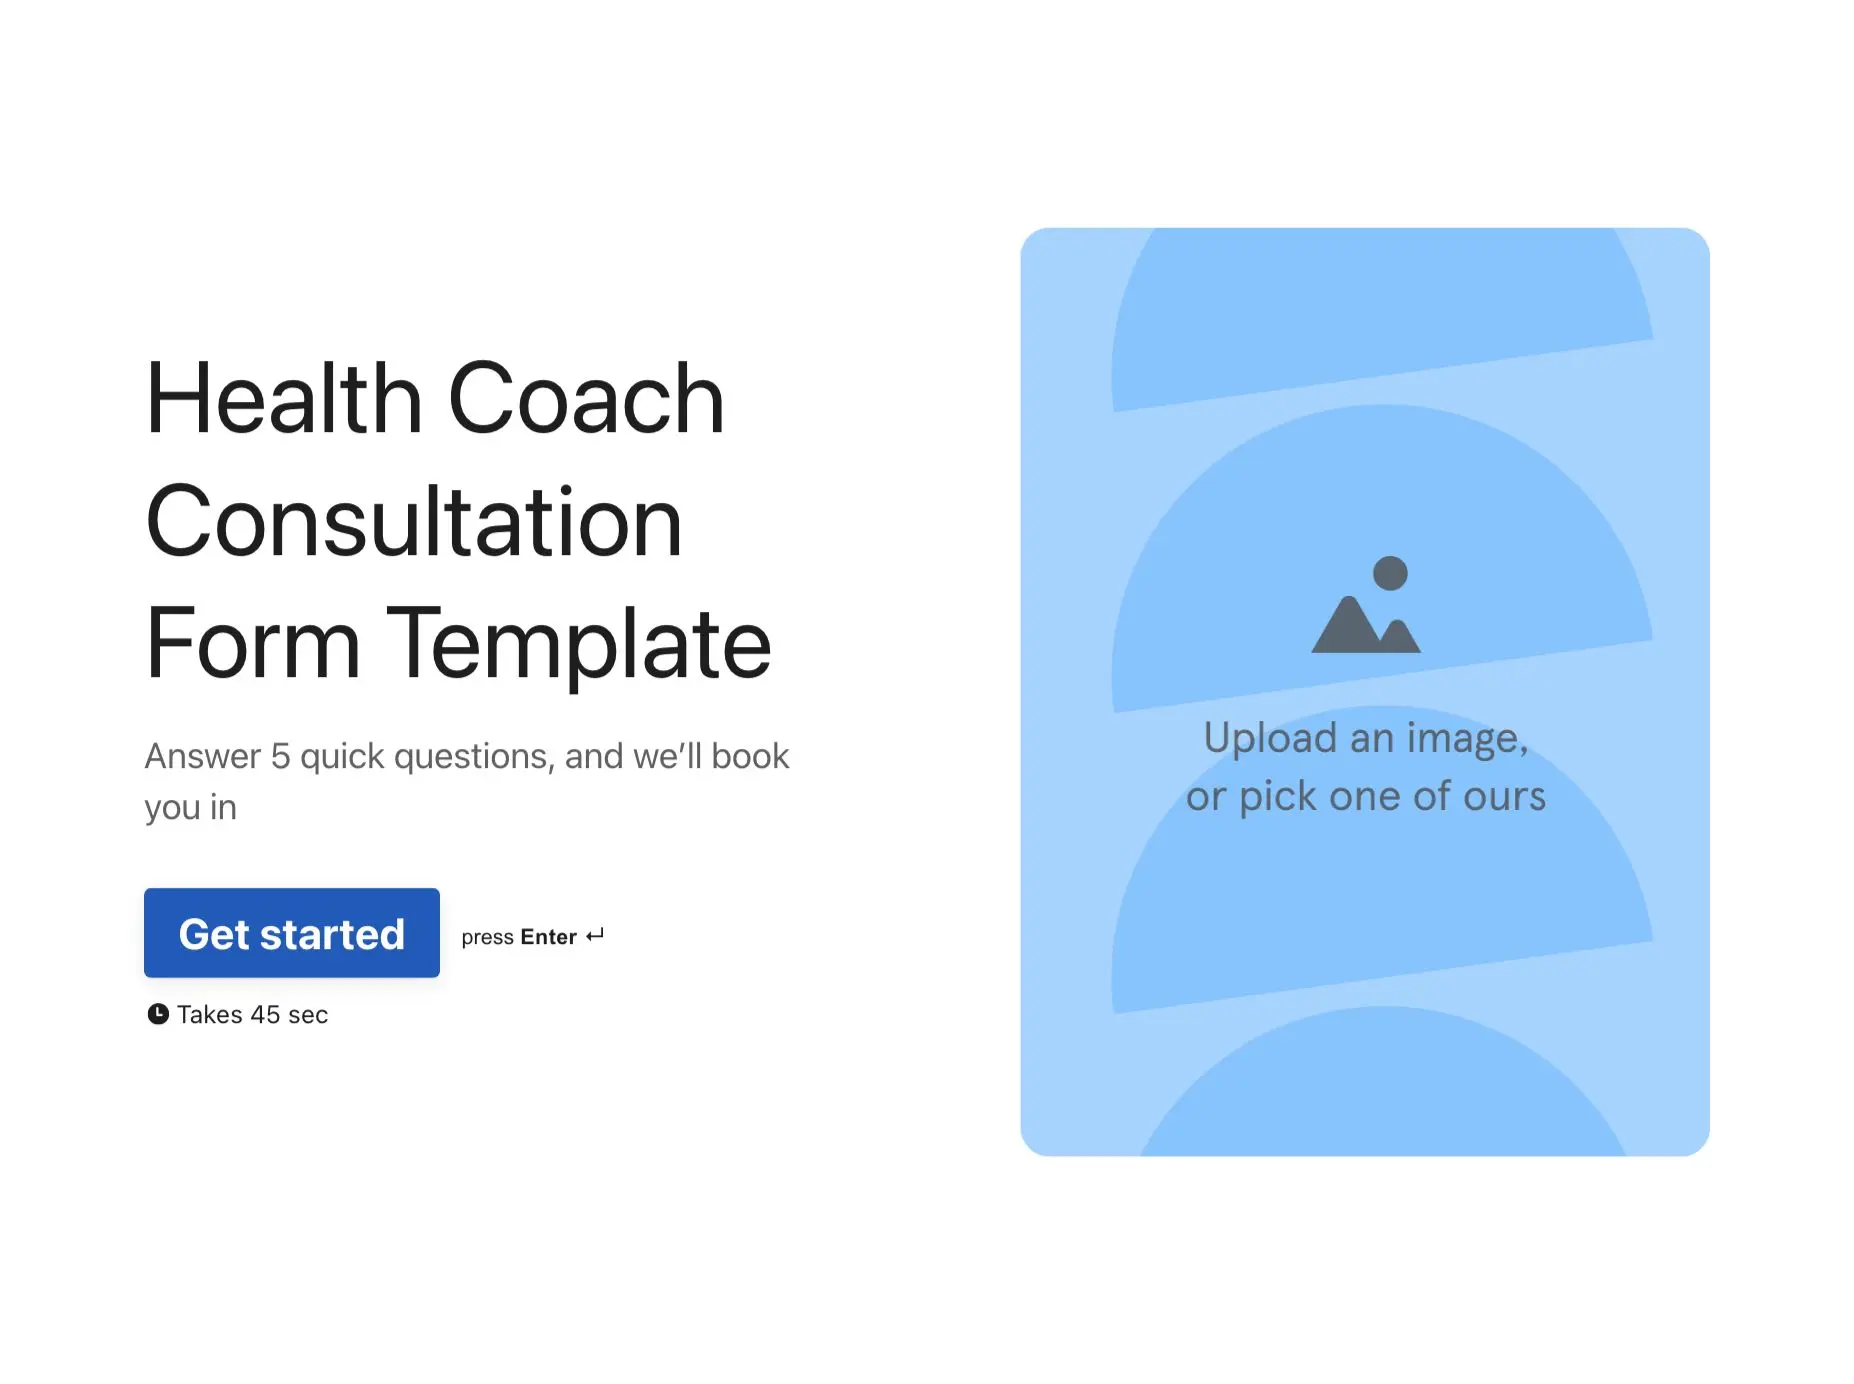 Health Coach Consultation Form Template Hero